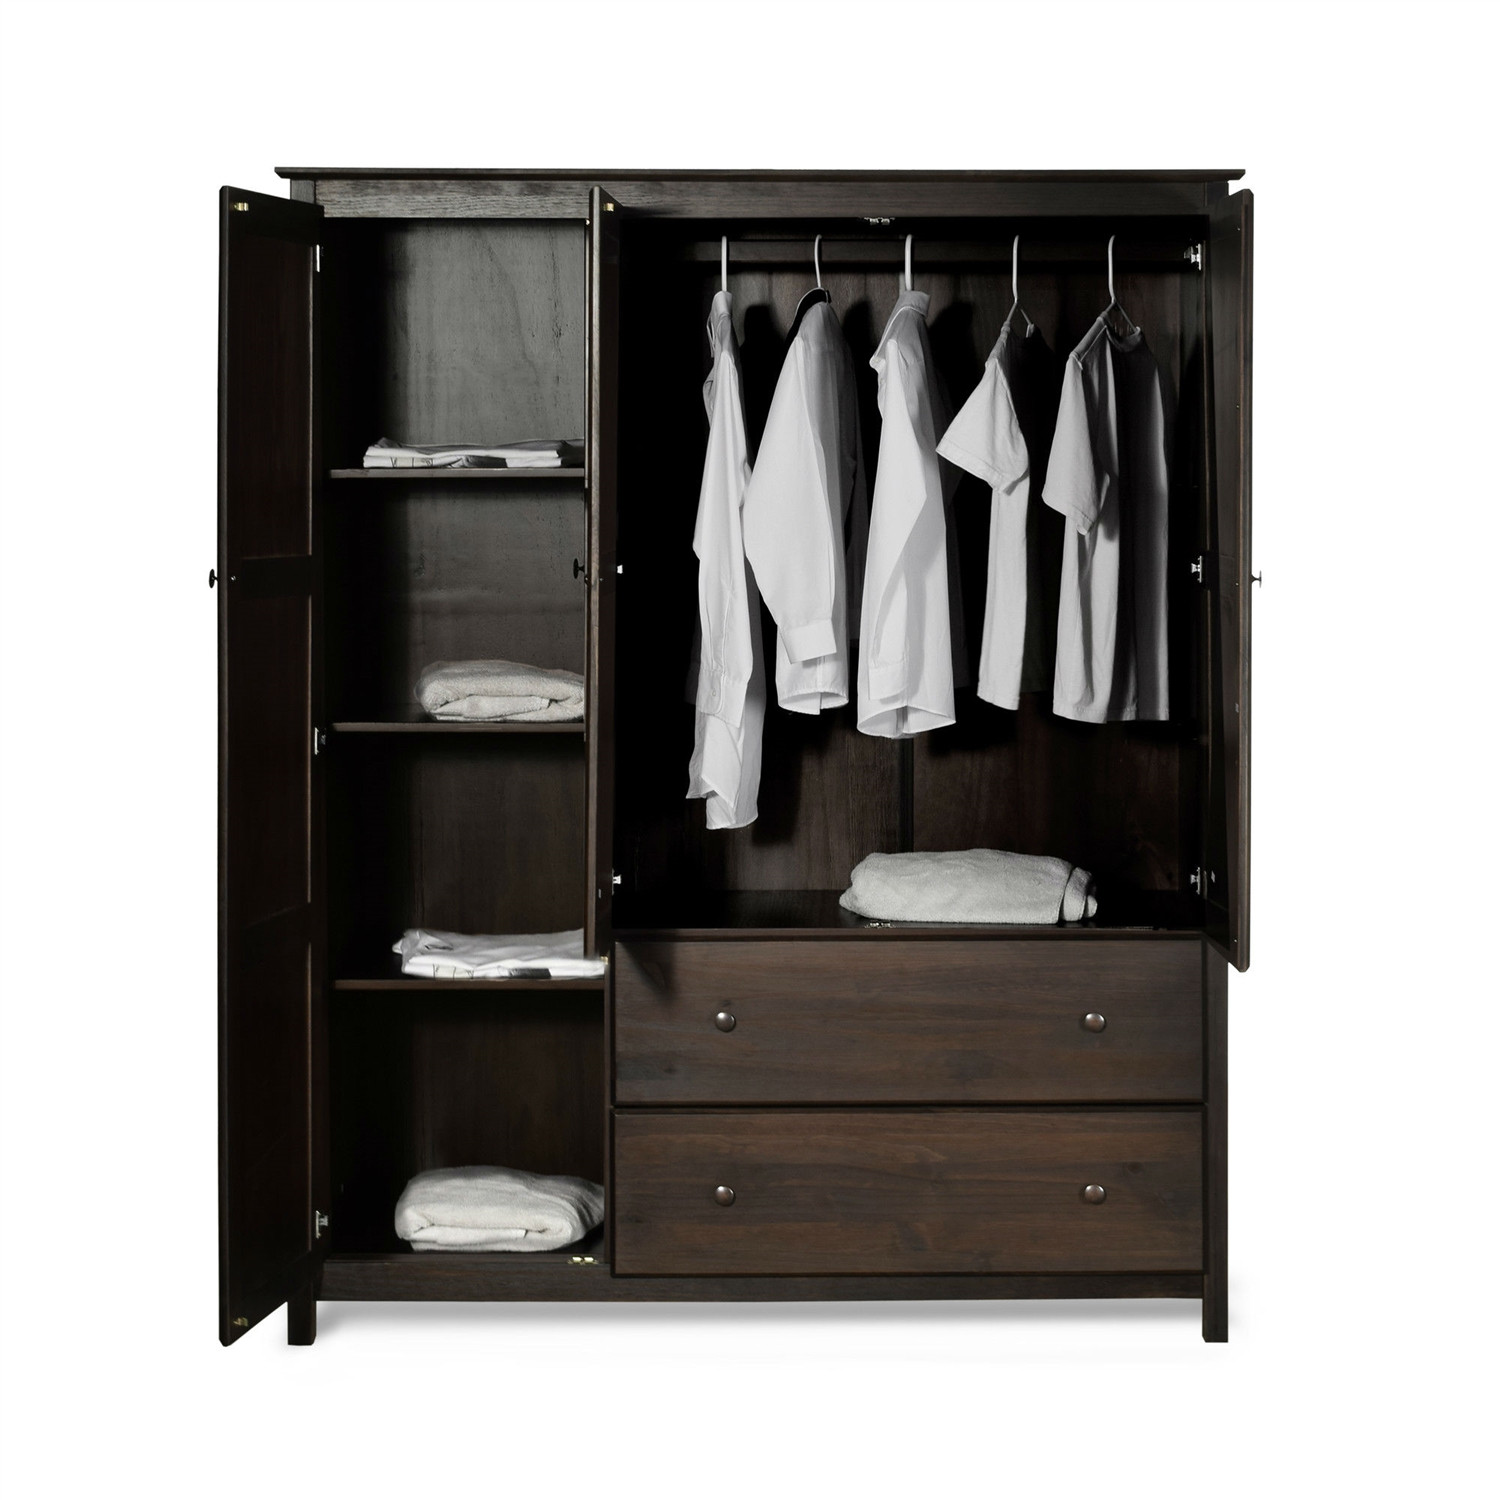 Bedroom Closet Cabinets
 Espresso Wood Finish Bedroom Wardrobe Armoire Cabinet